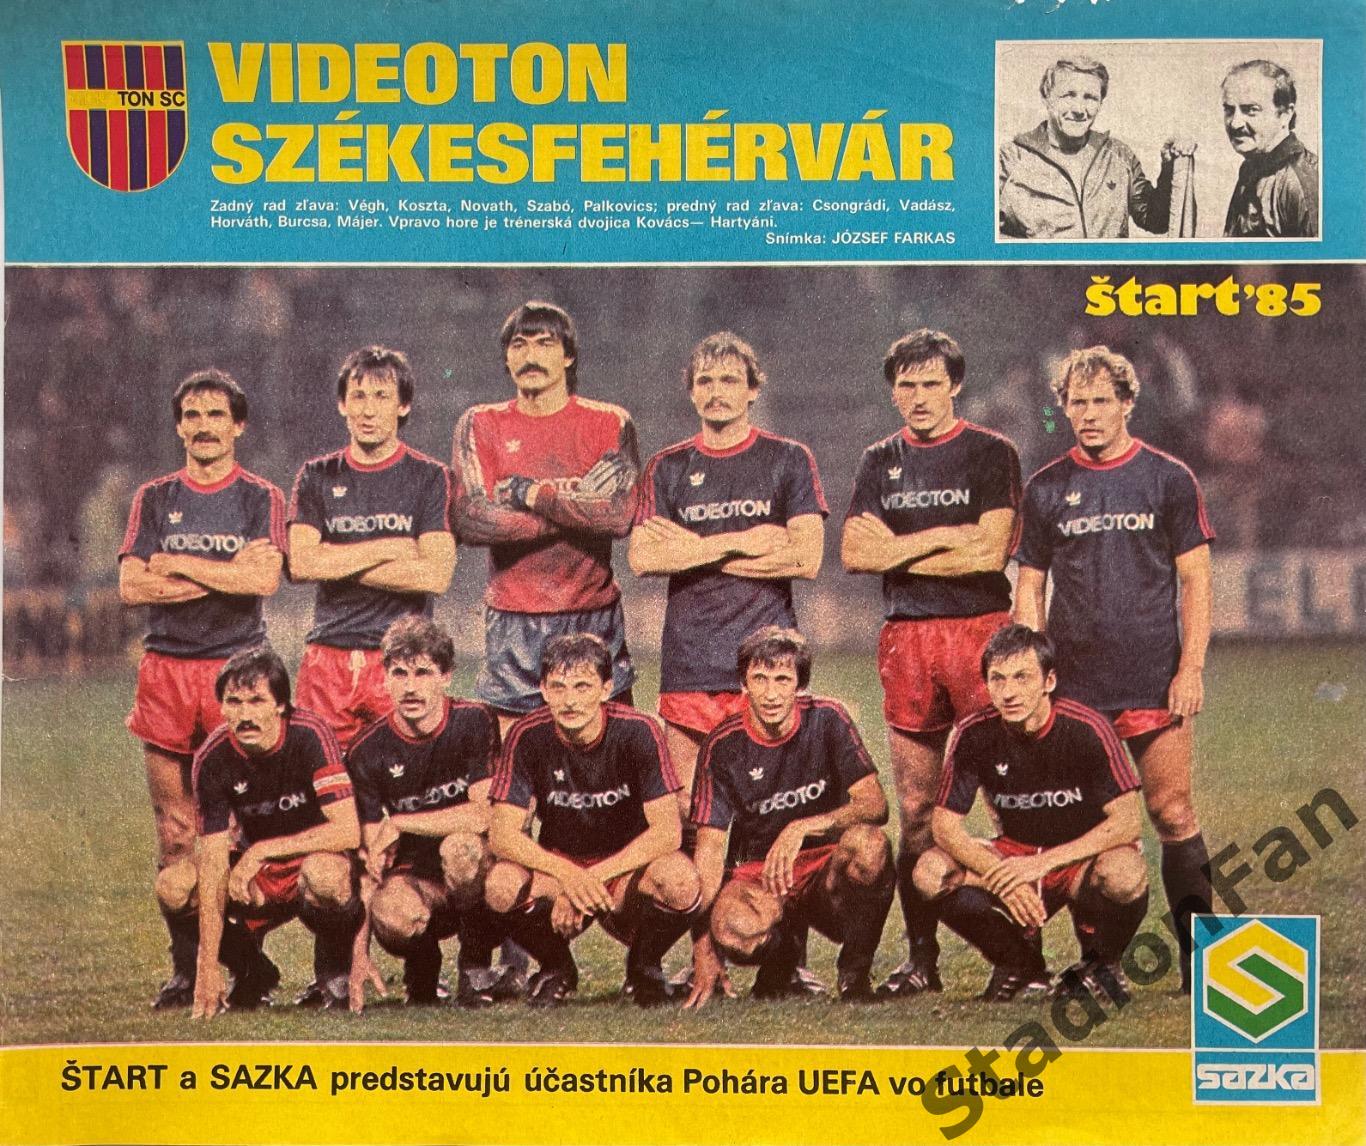 Постер из журнала Start (Старт) - Videoton, 1985